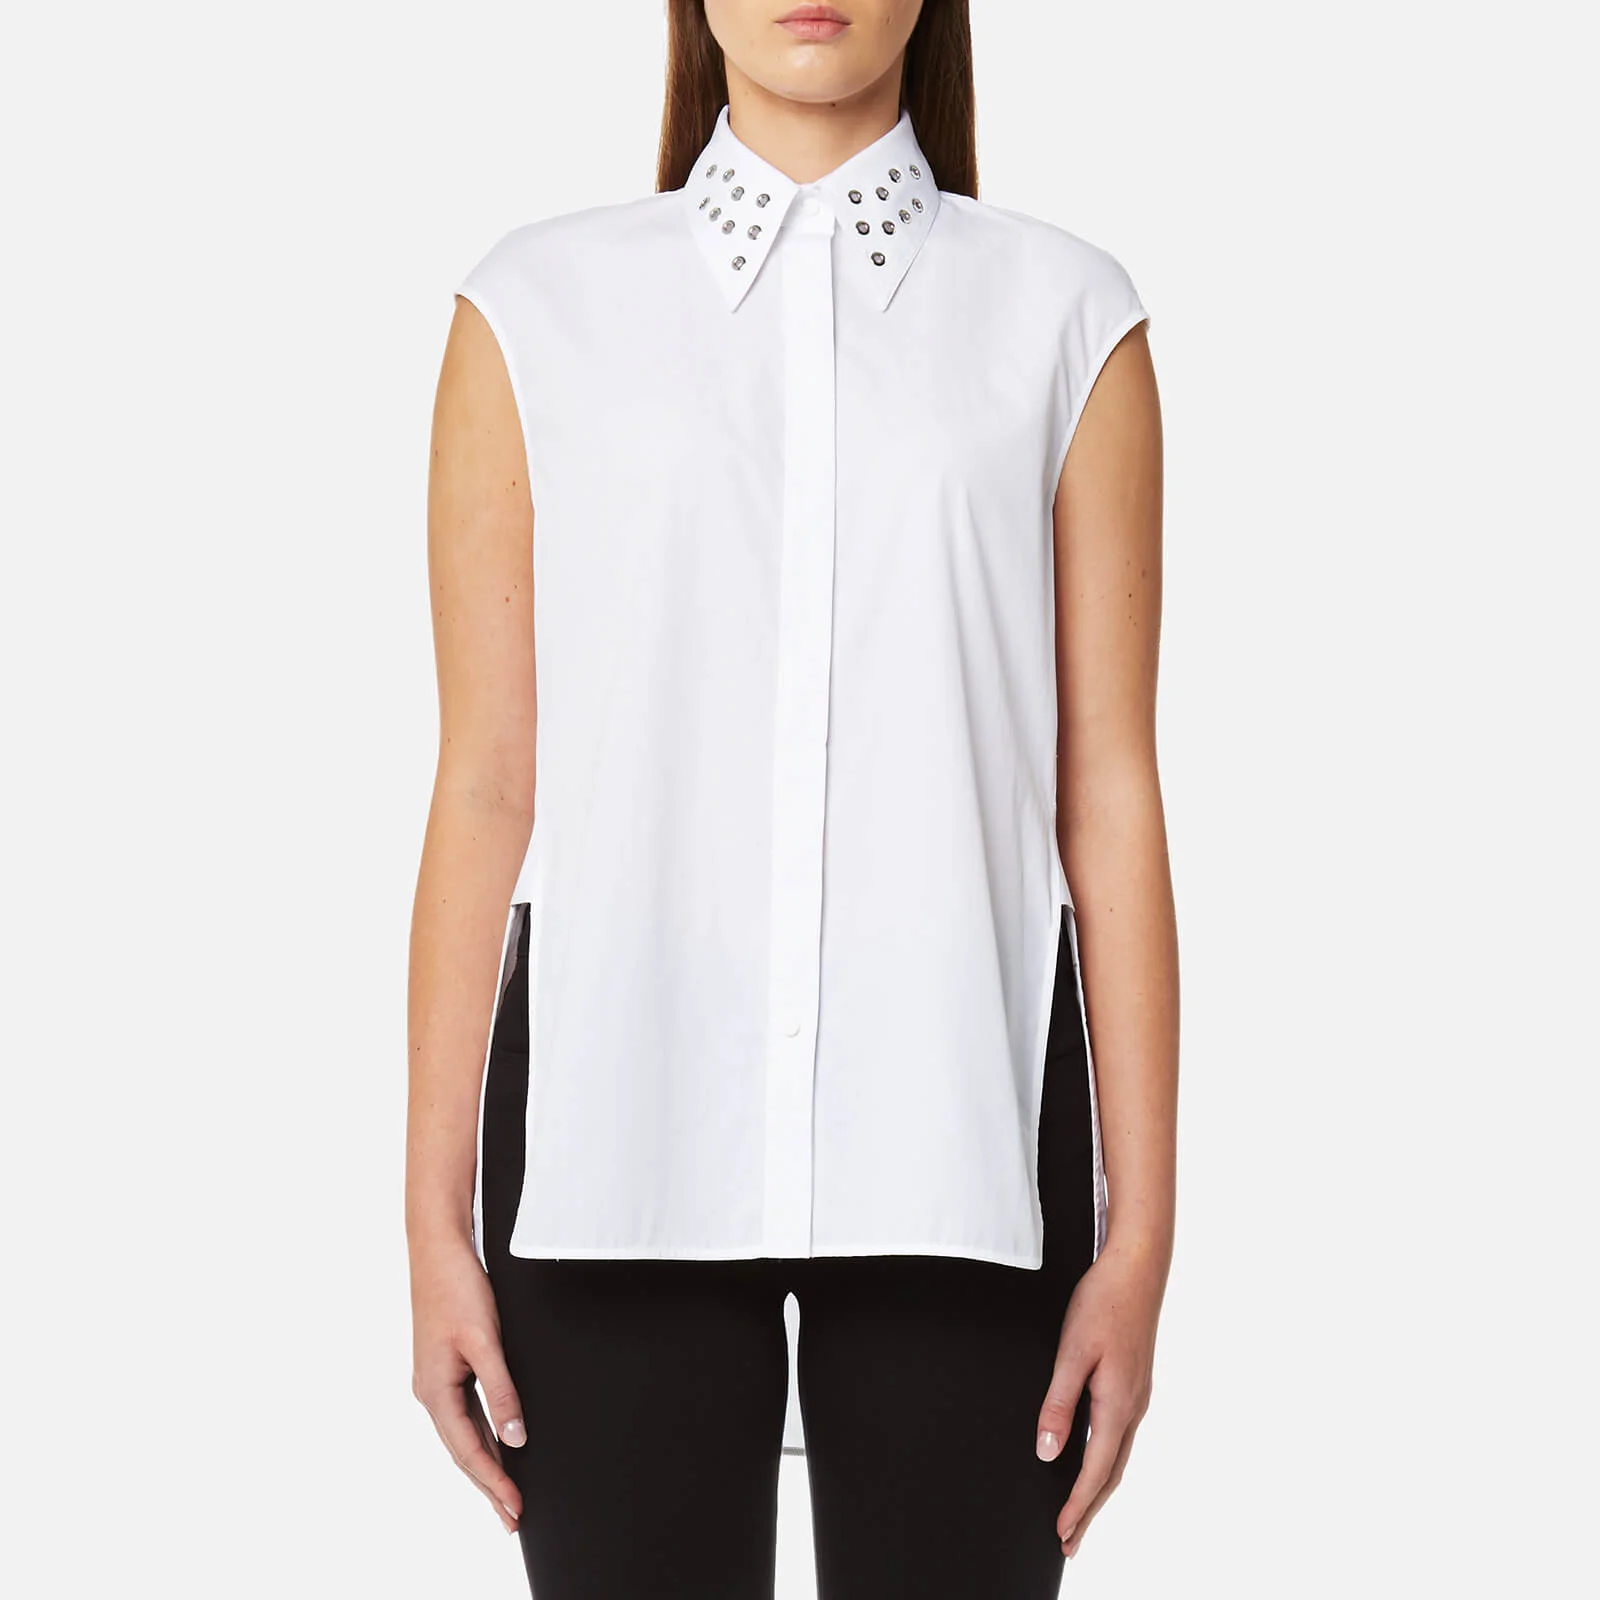 Helmut Lang Women's Eyelet Sleeveless Shirt - White Image 1